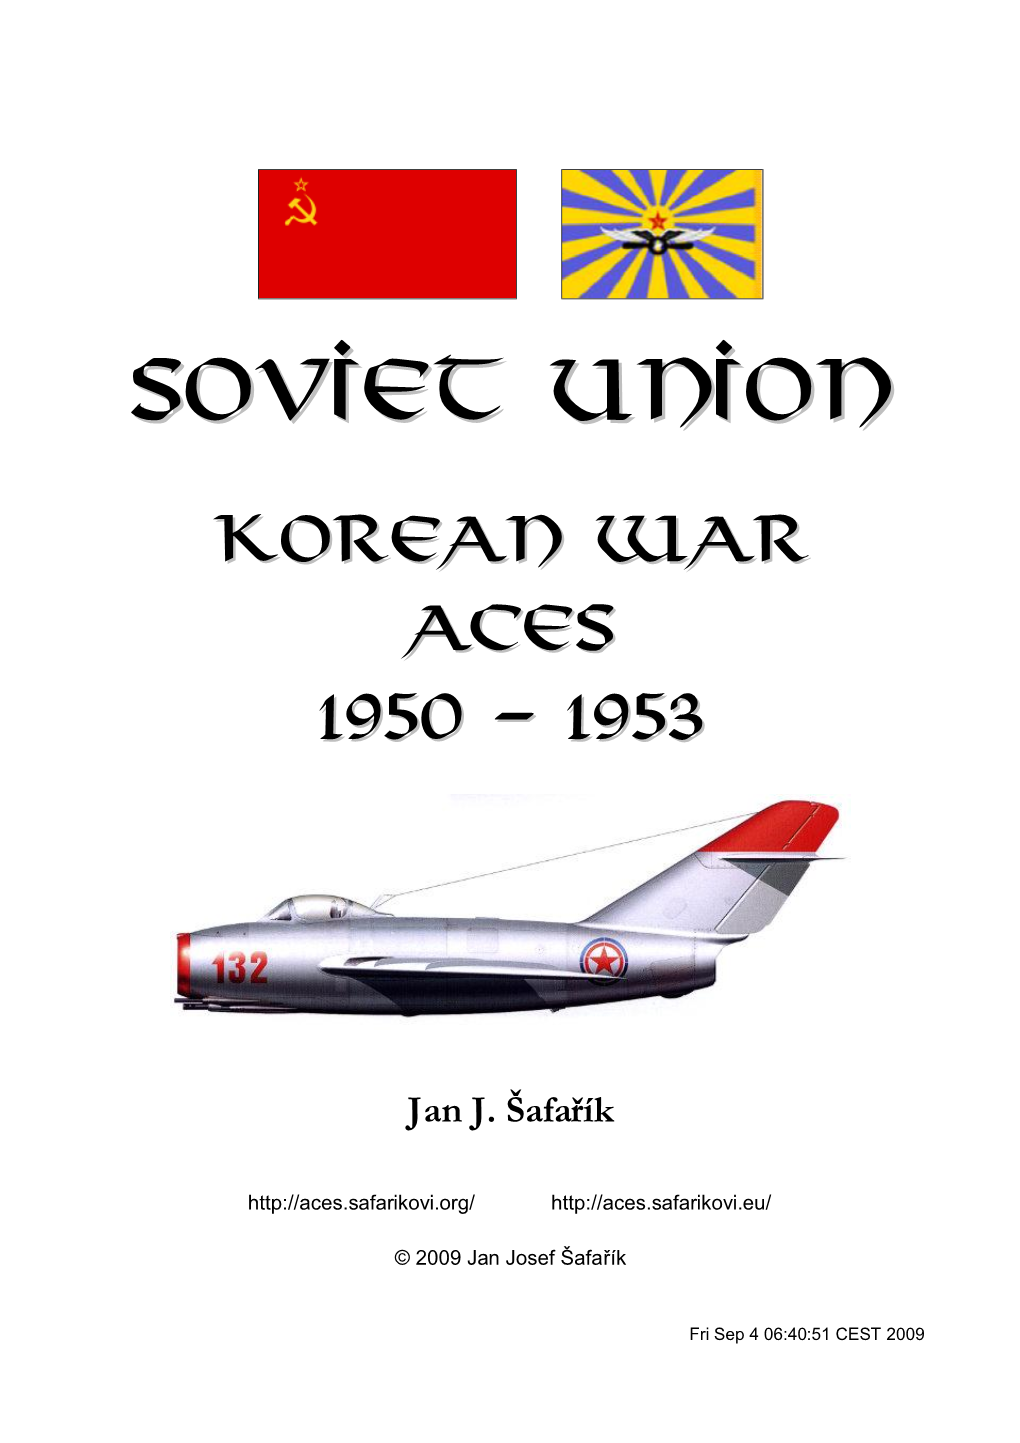 Soviet Union's Long-Lived Korean War Fighter, Aerofax, Midland Publishing, 2001